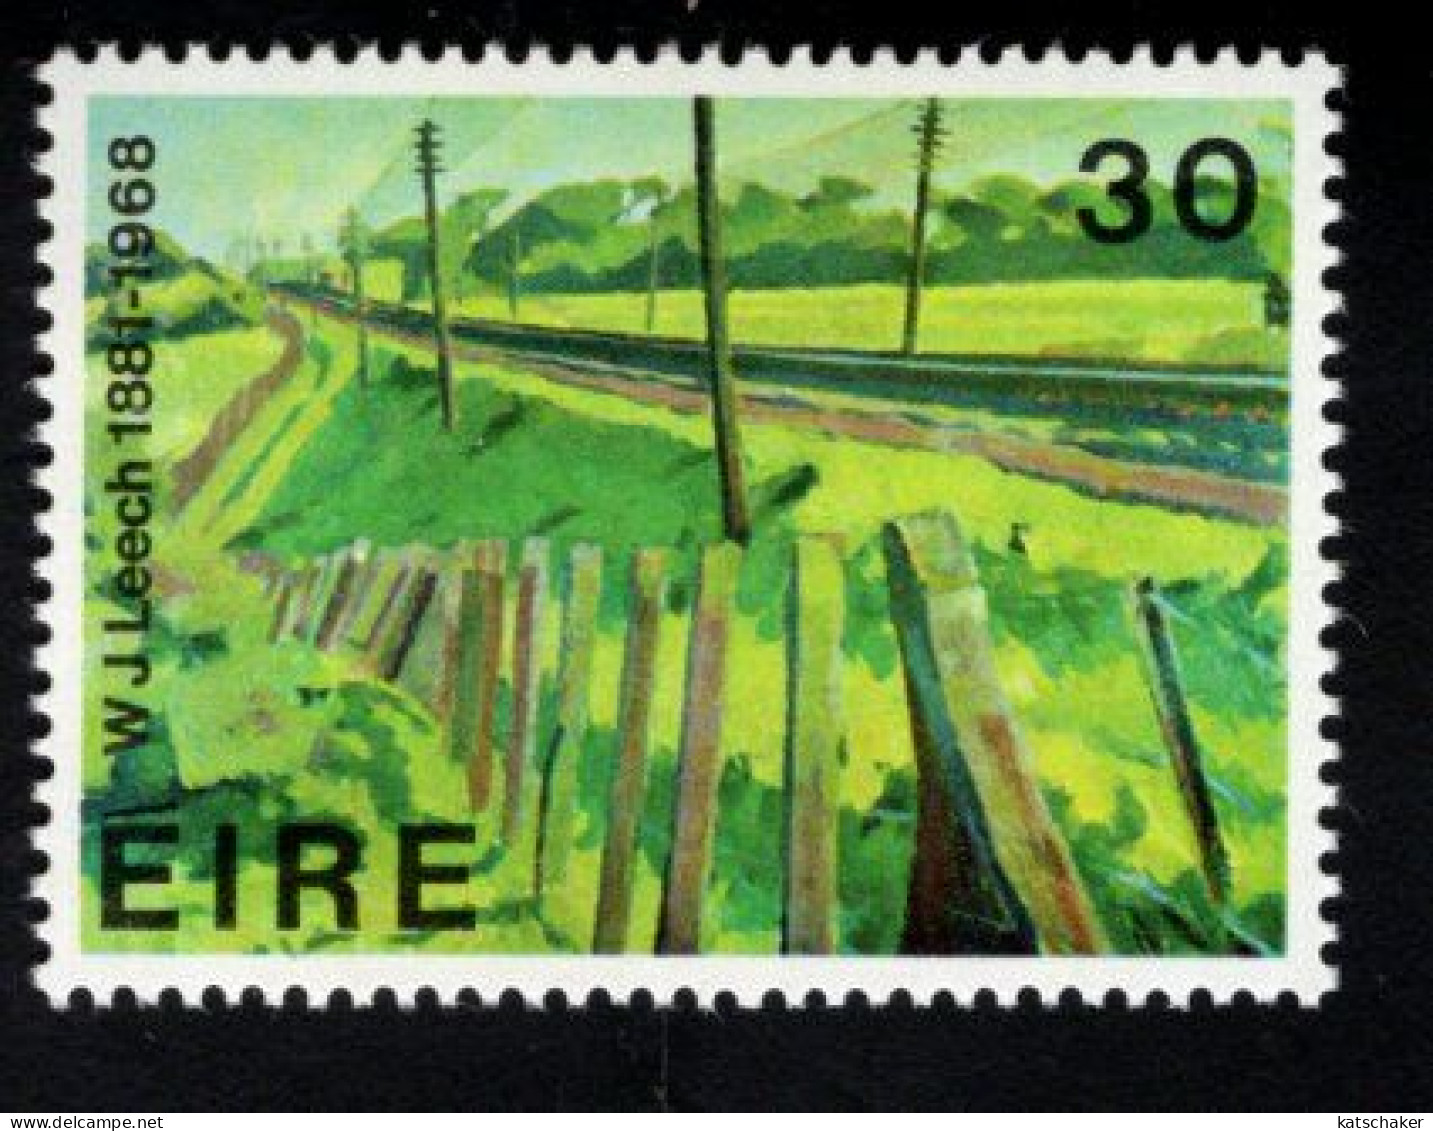 1999534826 1981  SCOTT 503 (XX) POSTFRIS  MINT NEVER HINGED - RAILWAY EMBANKEMENT BY WILLIAM JOHN LEECH - Unused Stamps